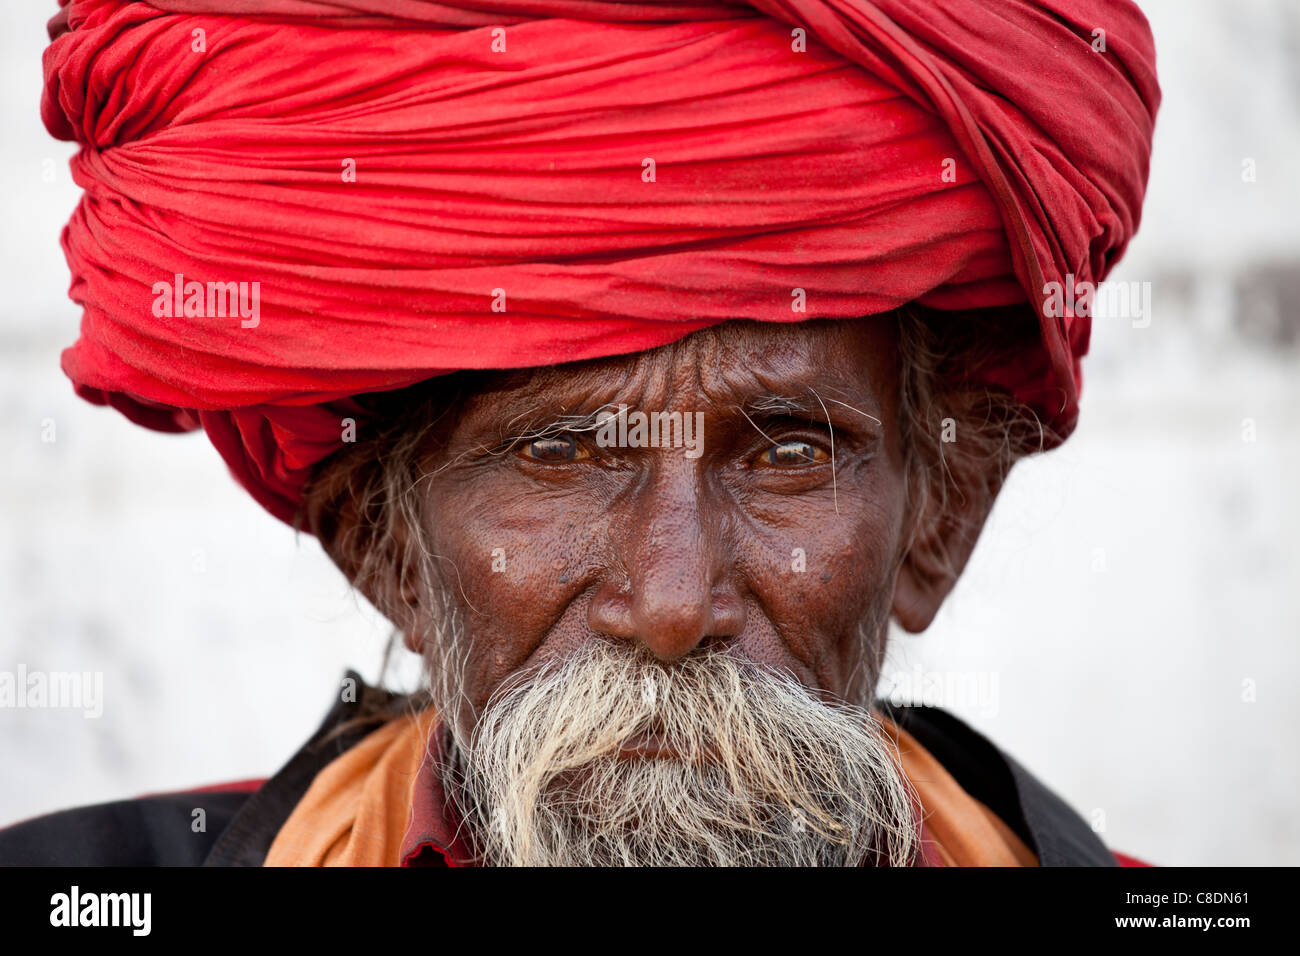 Hindu man pilgrim with long hair in turban at Dashashwamedh Ghat in holy city of Varanasi, Benares, India Stock Photo